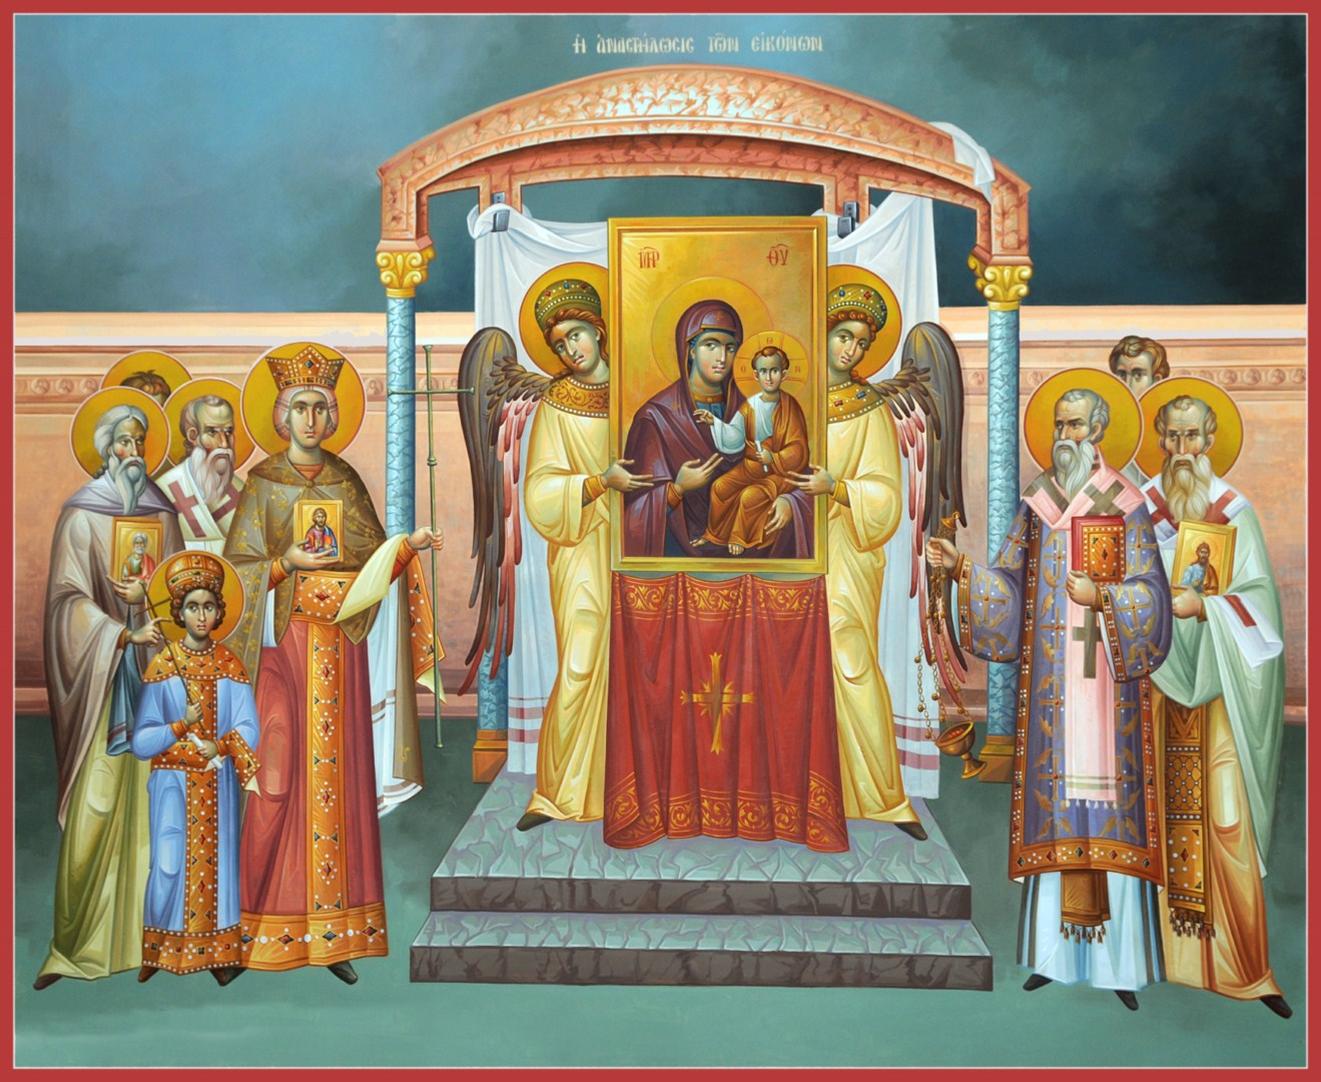 Sunday of Orthodoxy, Orthodox Church Fighting Heresies and Resisting Worldly Errors